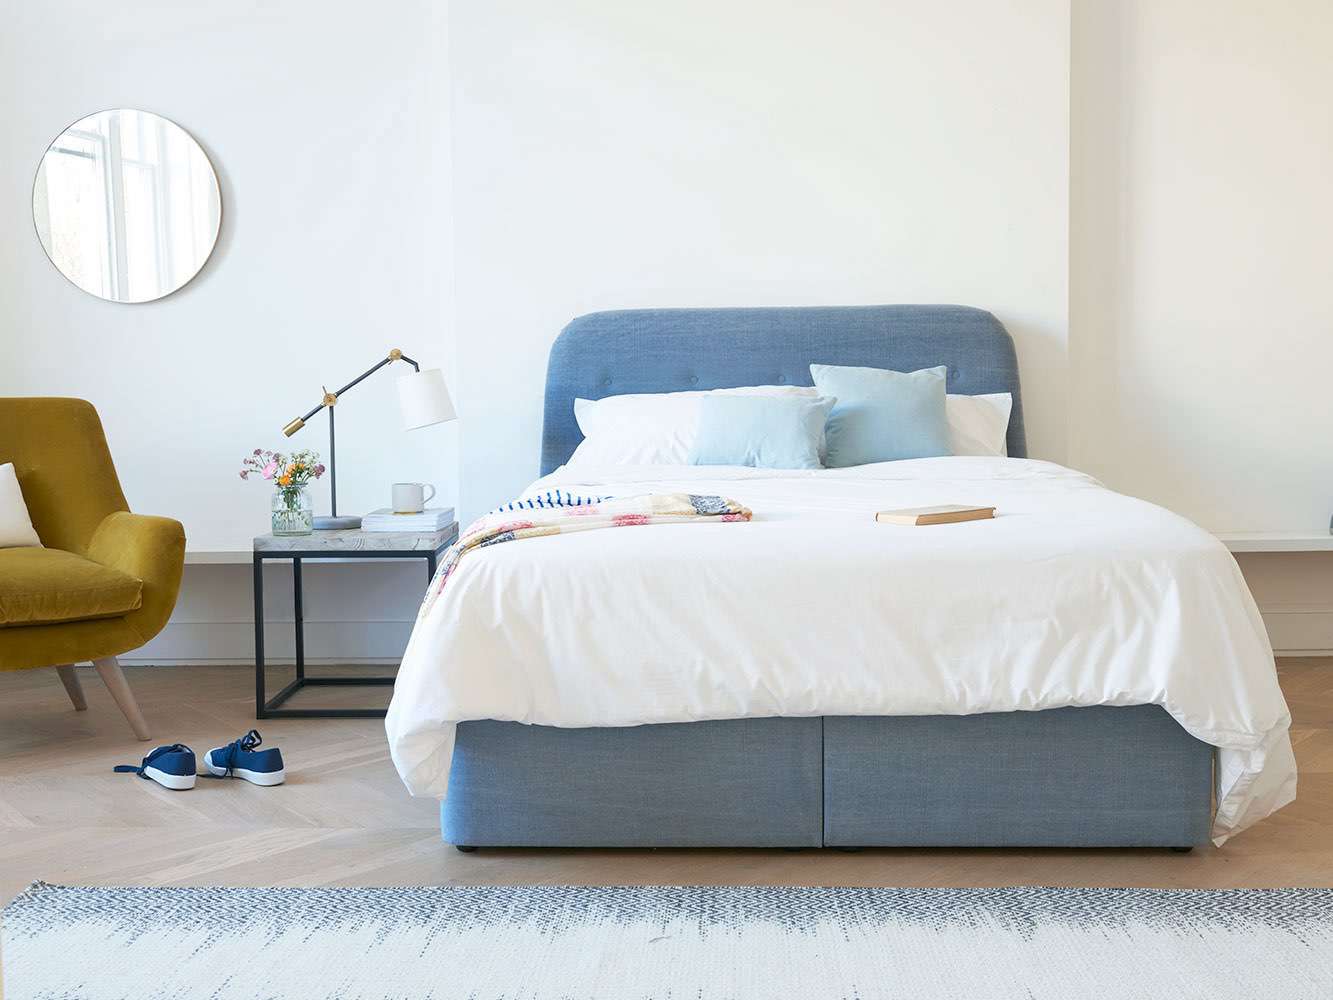 Choose a hard wood bed or a foam bed mattress?